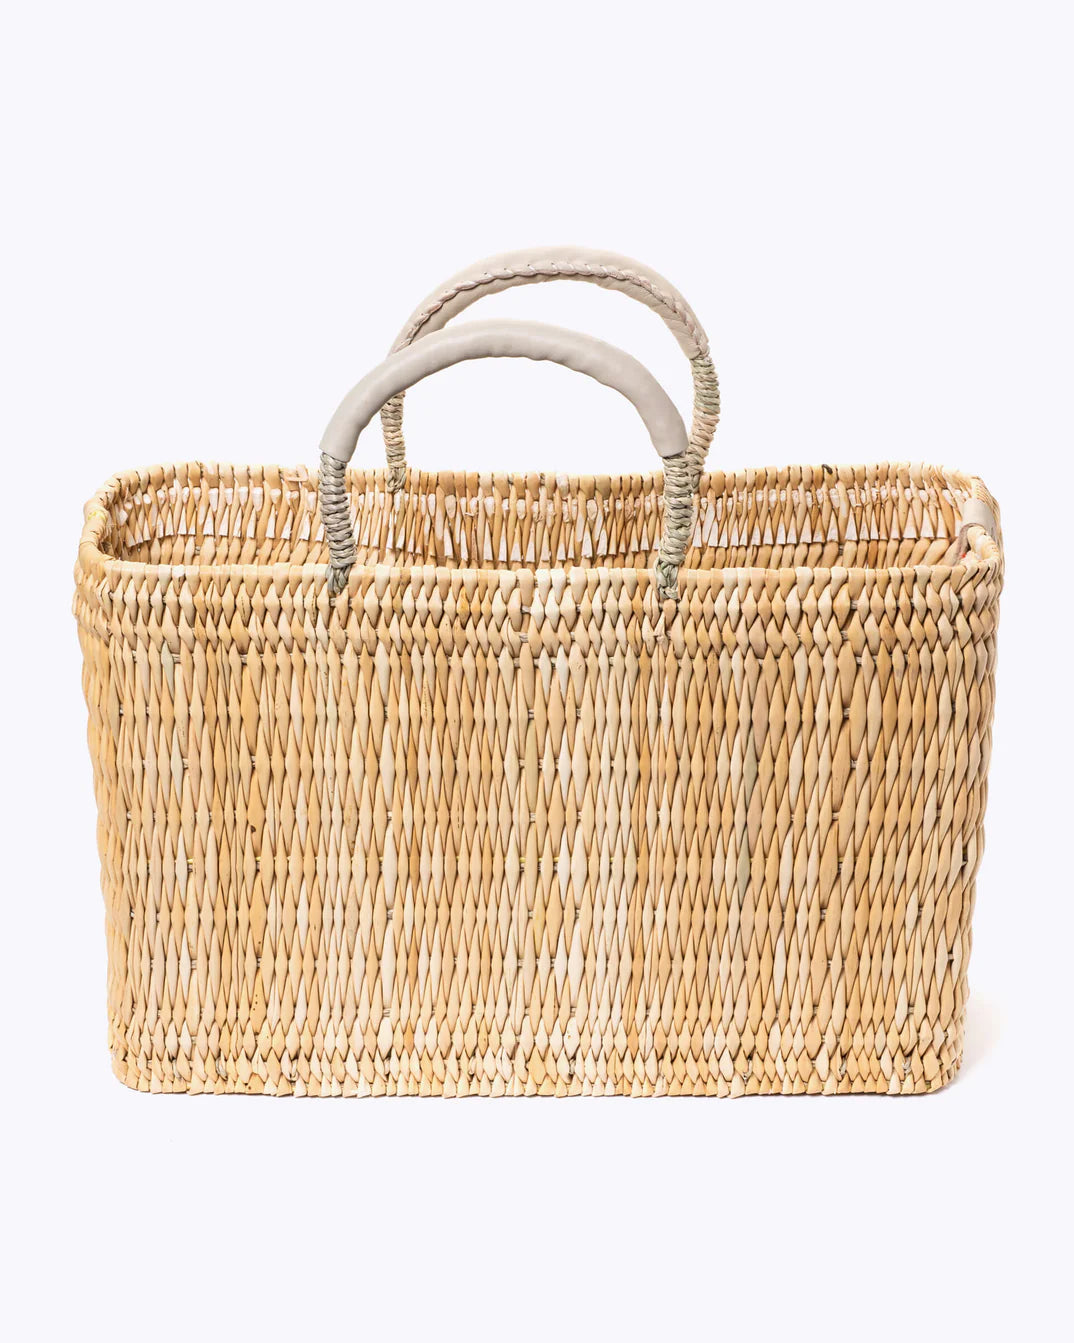 Mersea - Market Basket with Leather Handle - Medium